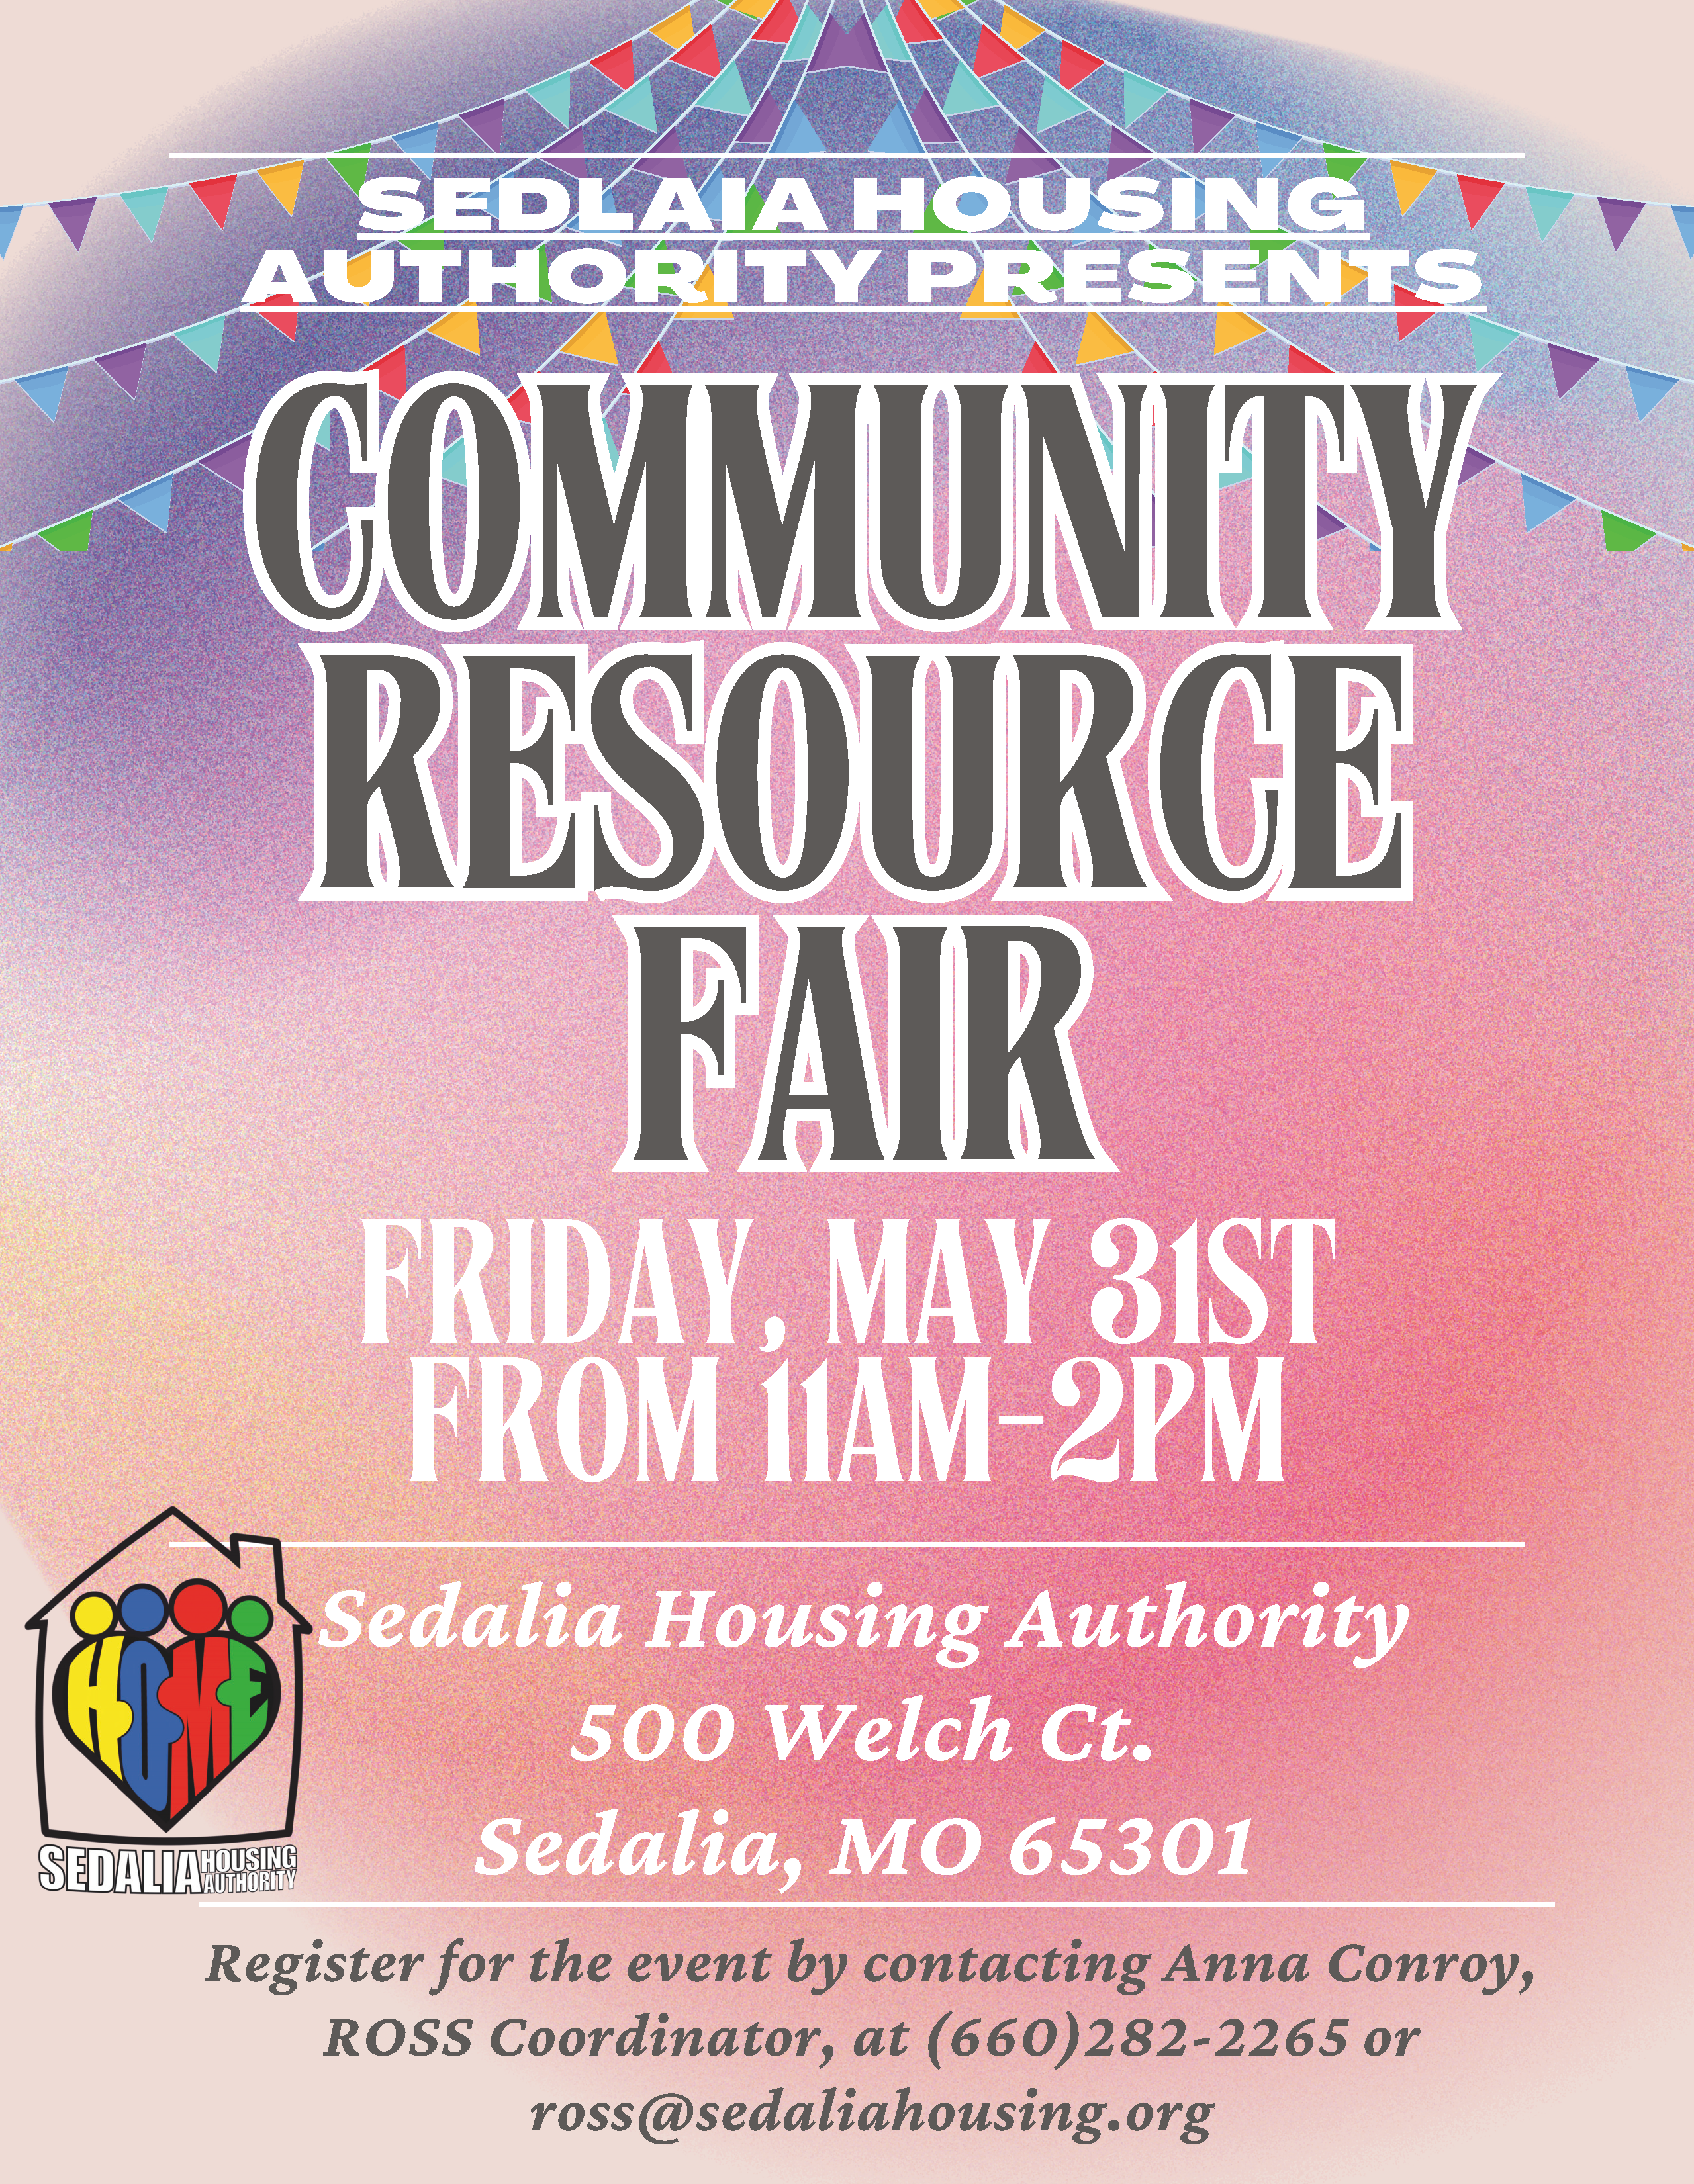 Sedalia Housing Authority Community Resource Fair @ Sedalia Housing Authority